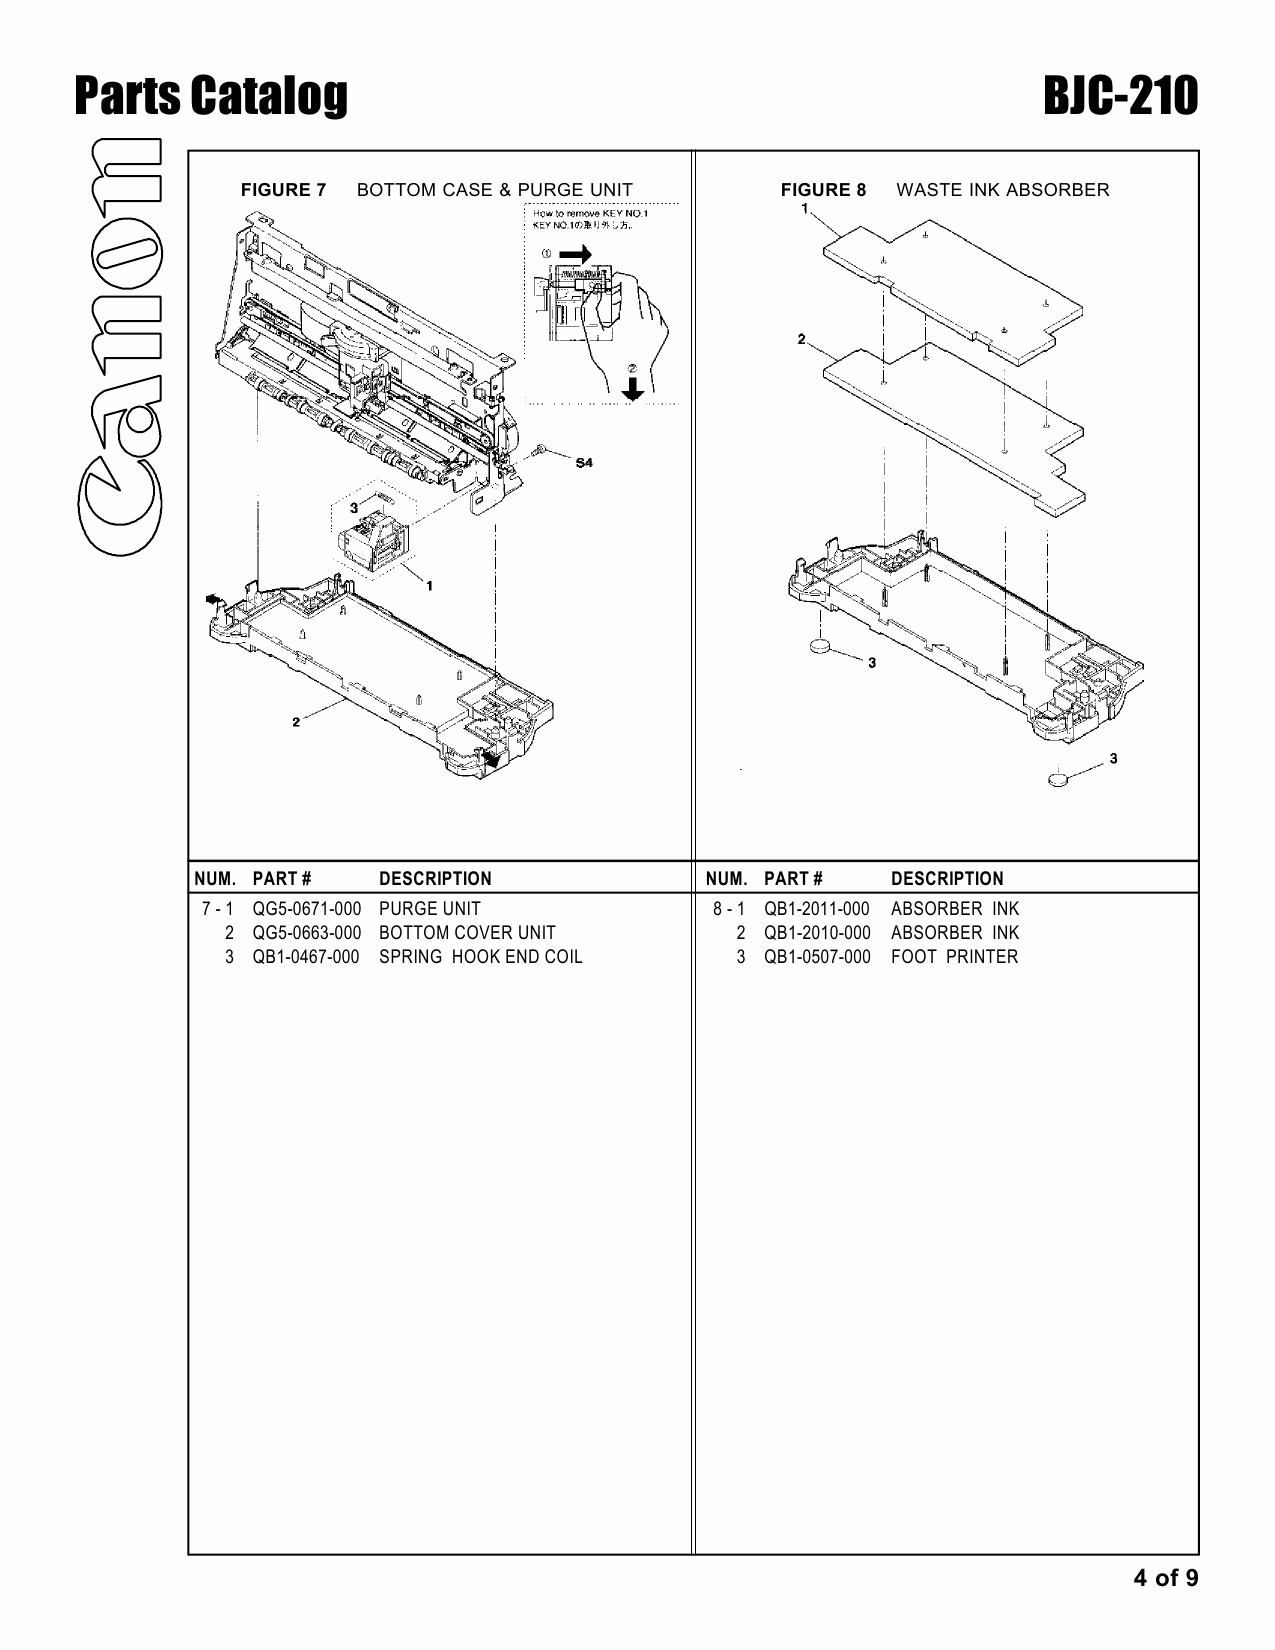 Canon BubbleJet BJC-210 Parts Catalog Manual-4